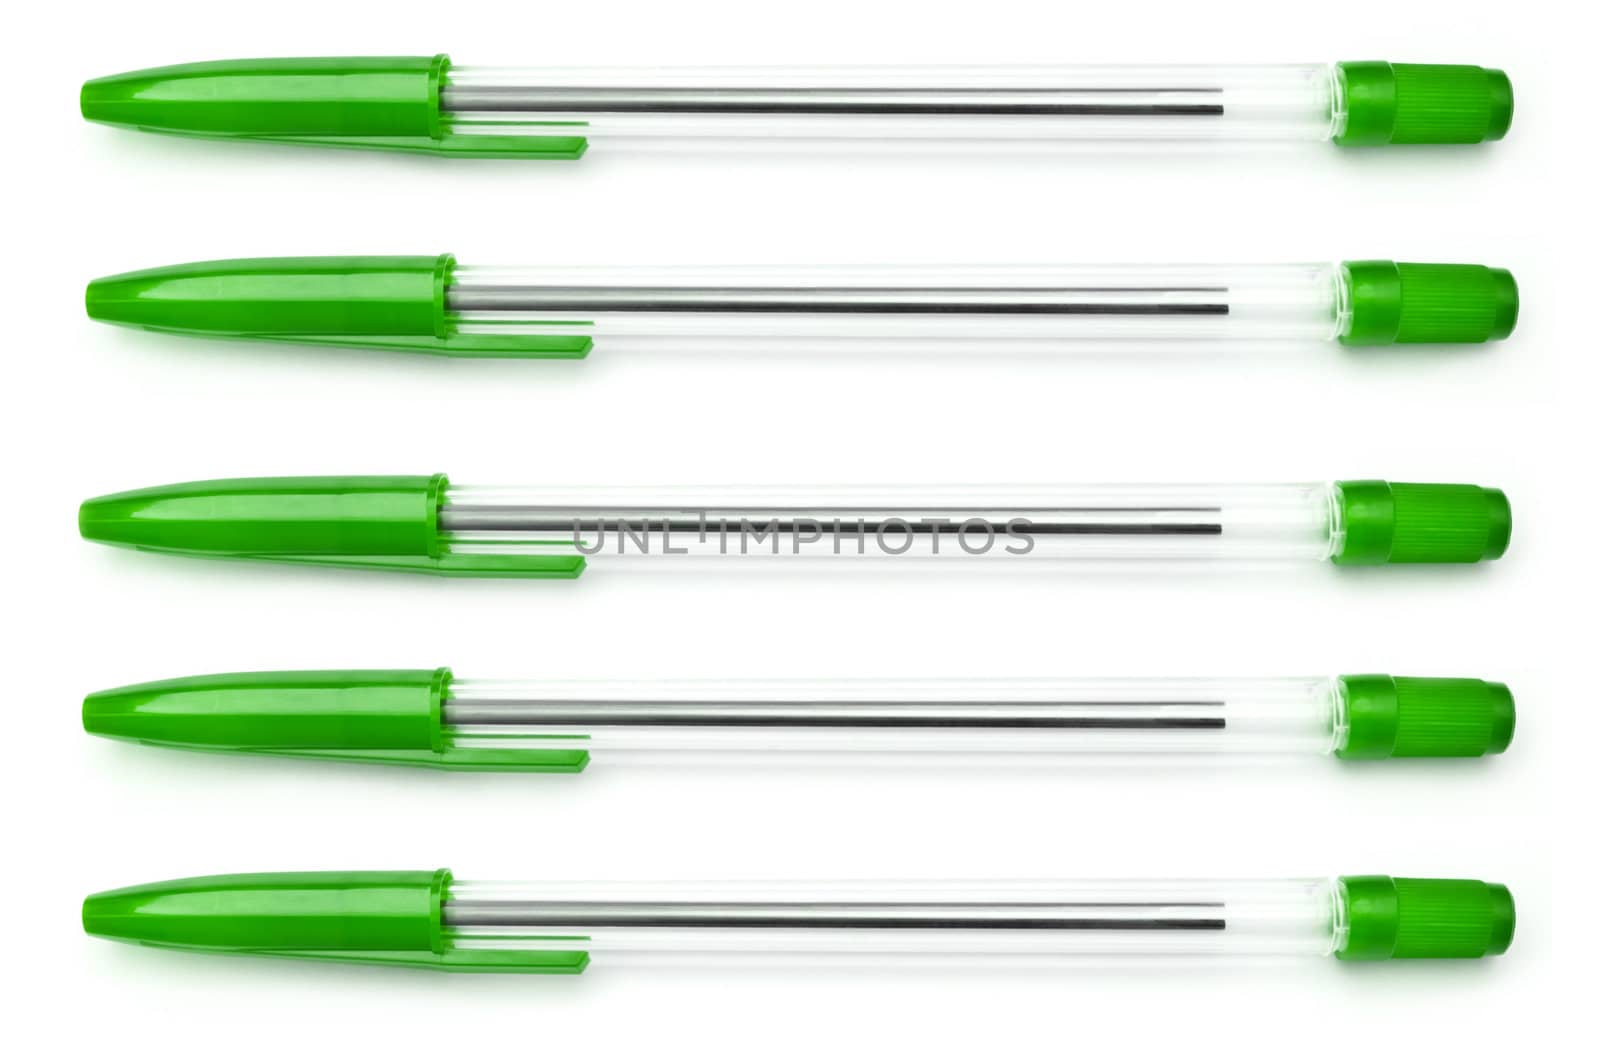 Five green writing pens arranged horizontally over white